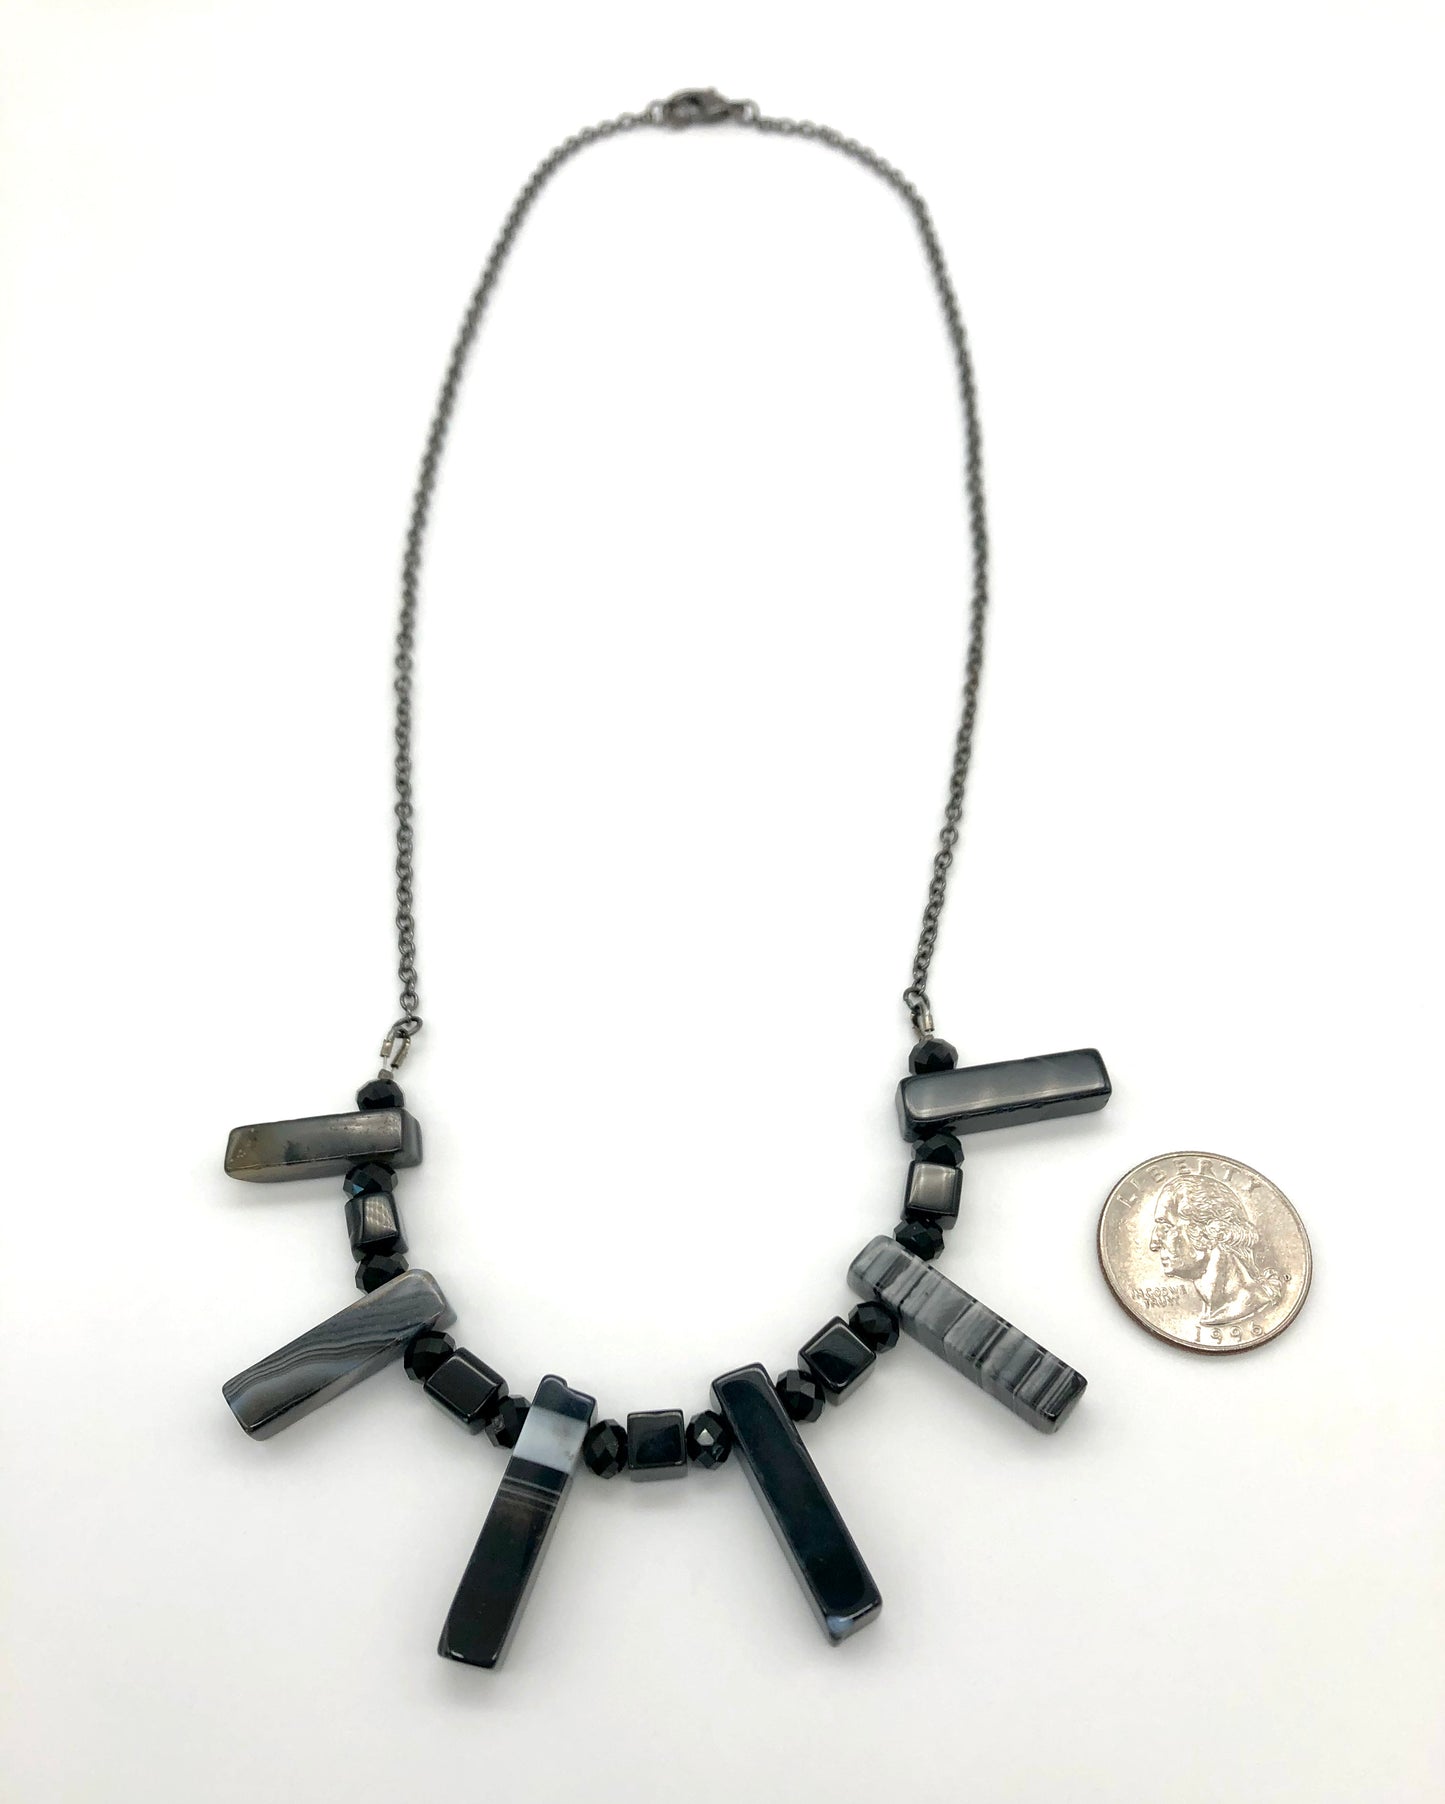 Black agate stone chain necklace